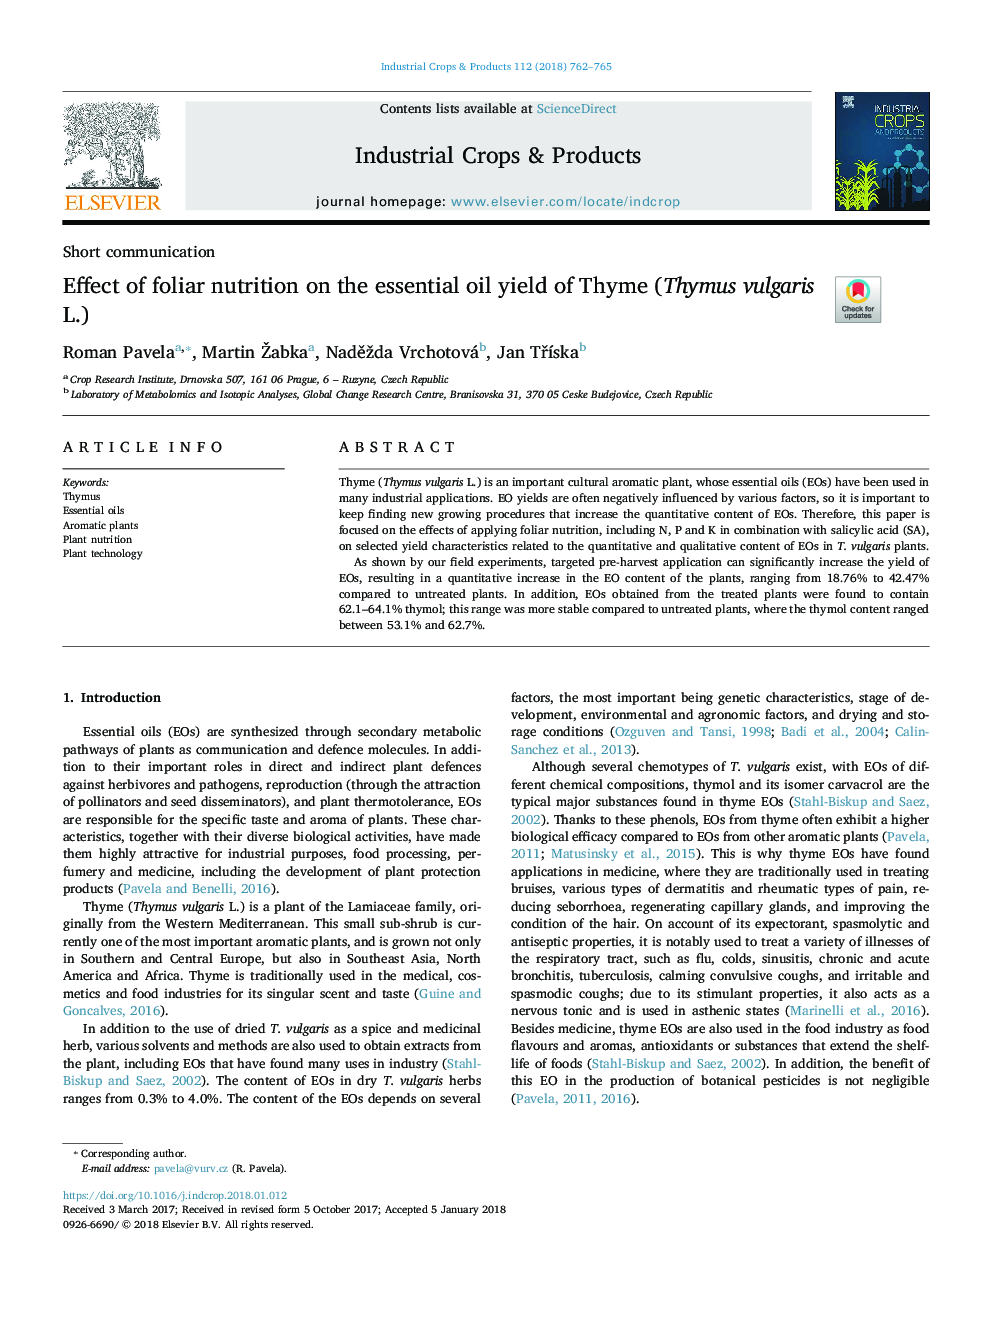 Effect of foliar nutrition on the essential oil yield of Thyme (Thymus vulgaris L.)